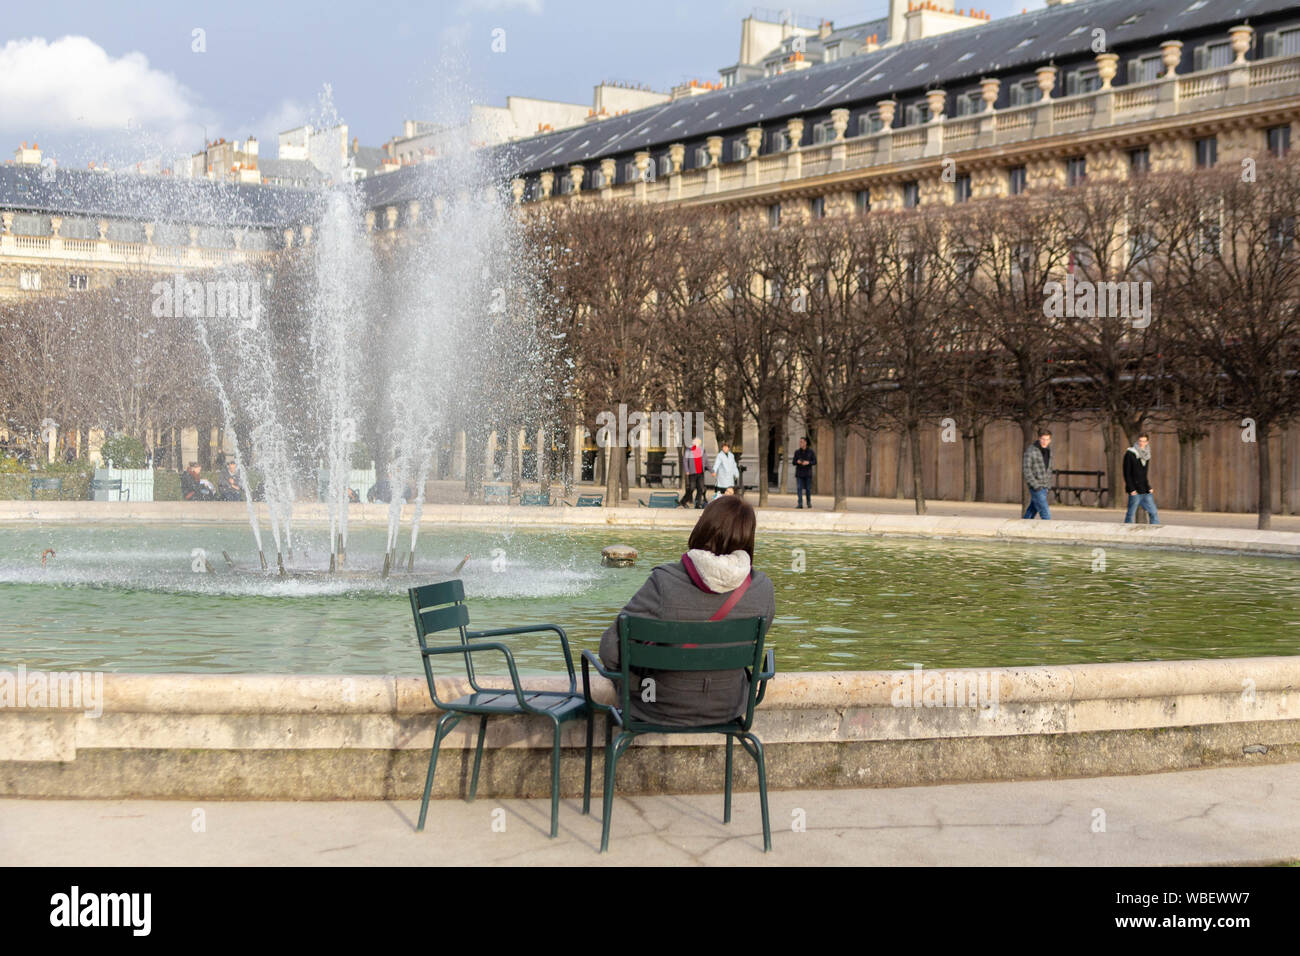 Paris, France - January 02, 2013: The gardens of the Royal Palace (Palais Royal) at Paris on a winter day Stock Photo